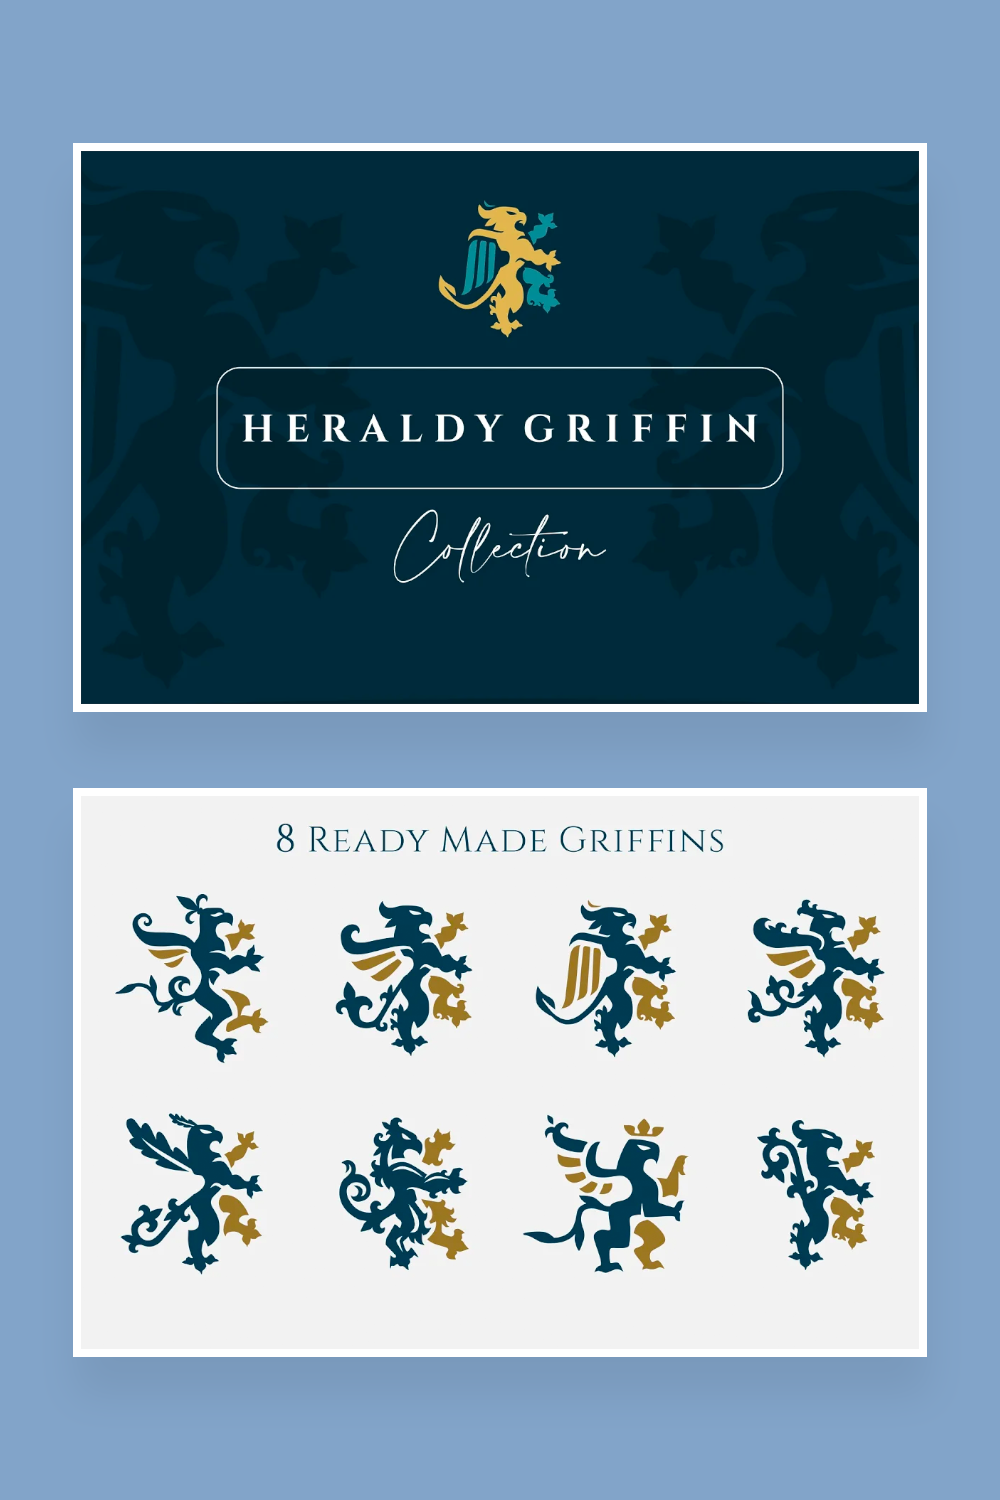 heraldry griffin logo collection pinterest